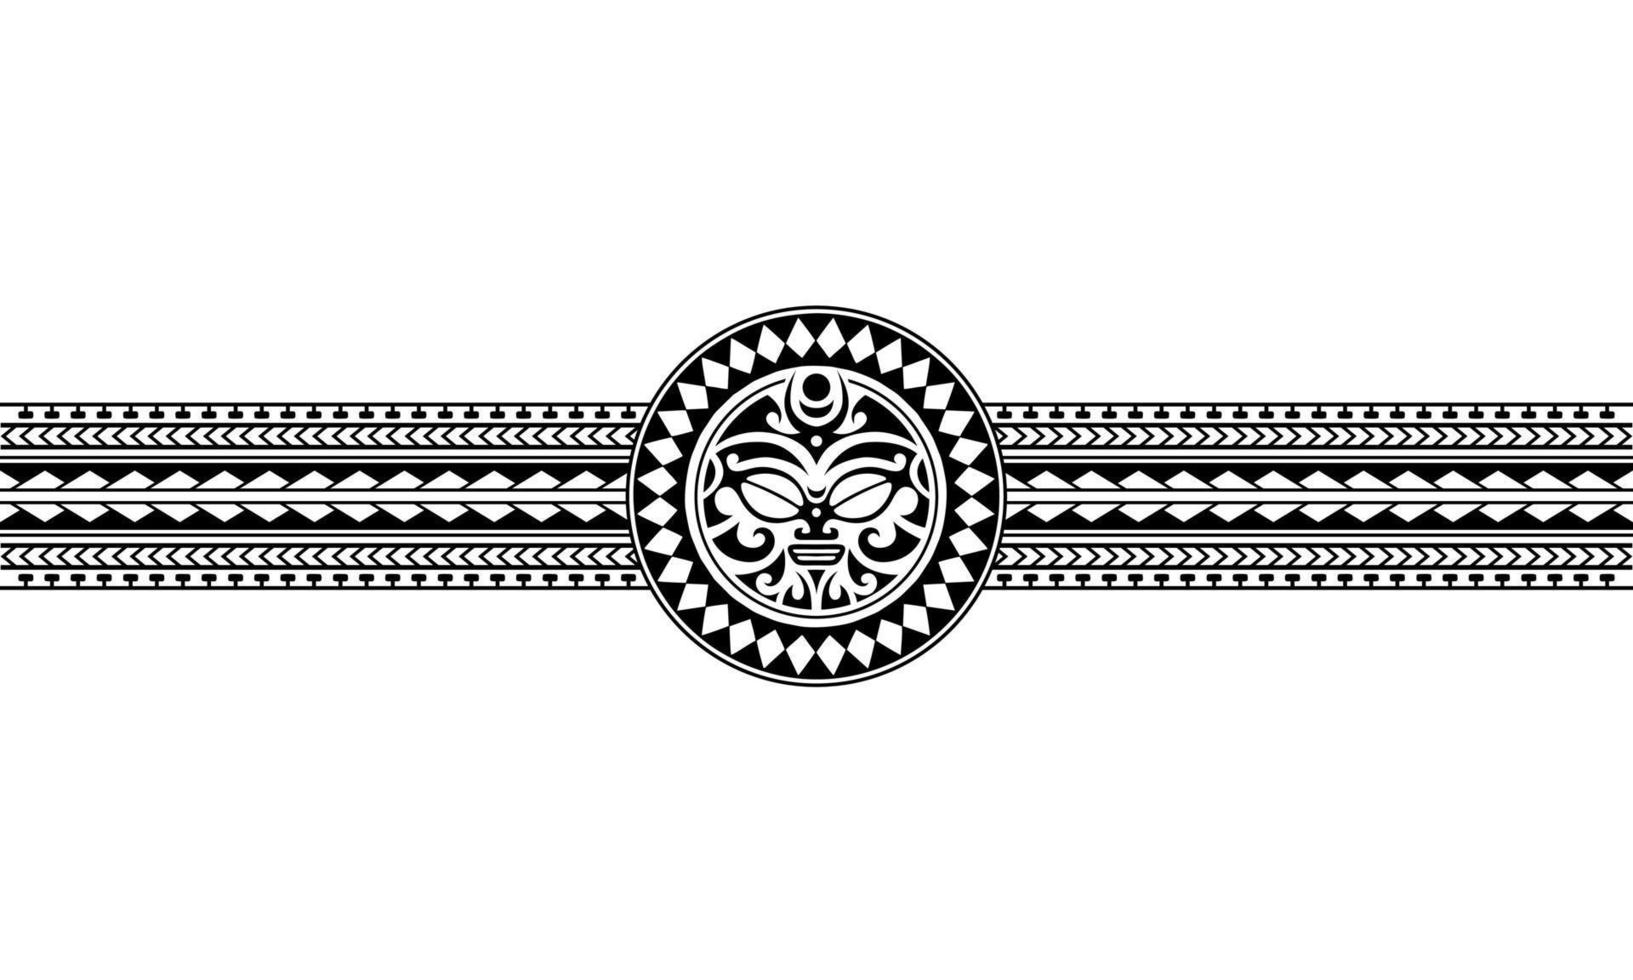 Maori polynesian tattoo border tribal sleeve pattern vector. Samoan bracelet tattoo for arm or foot. vector